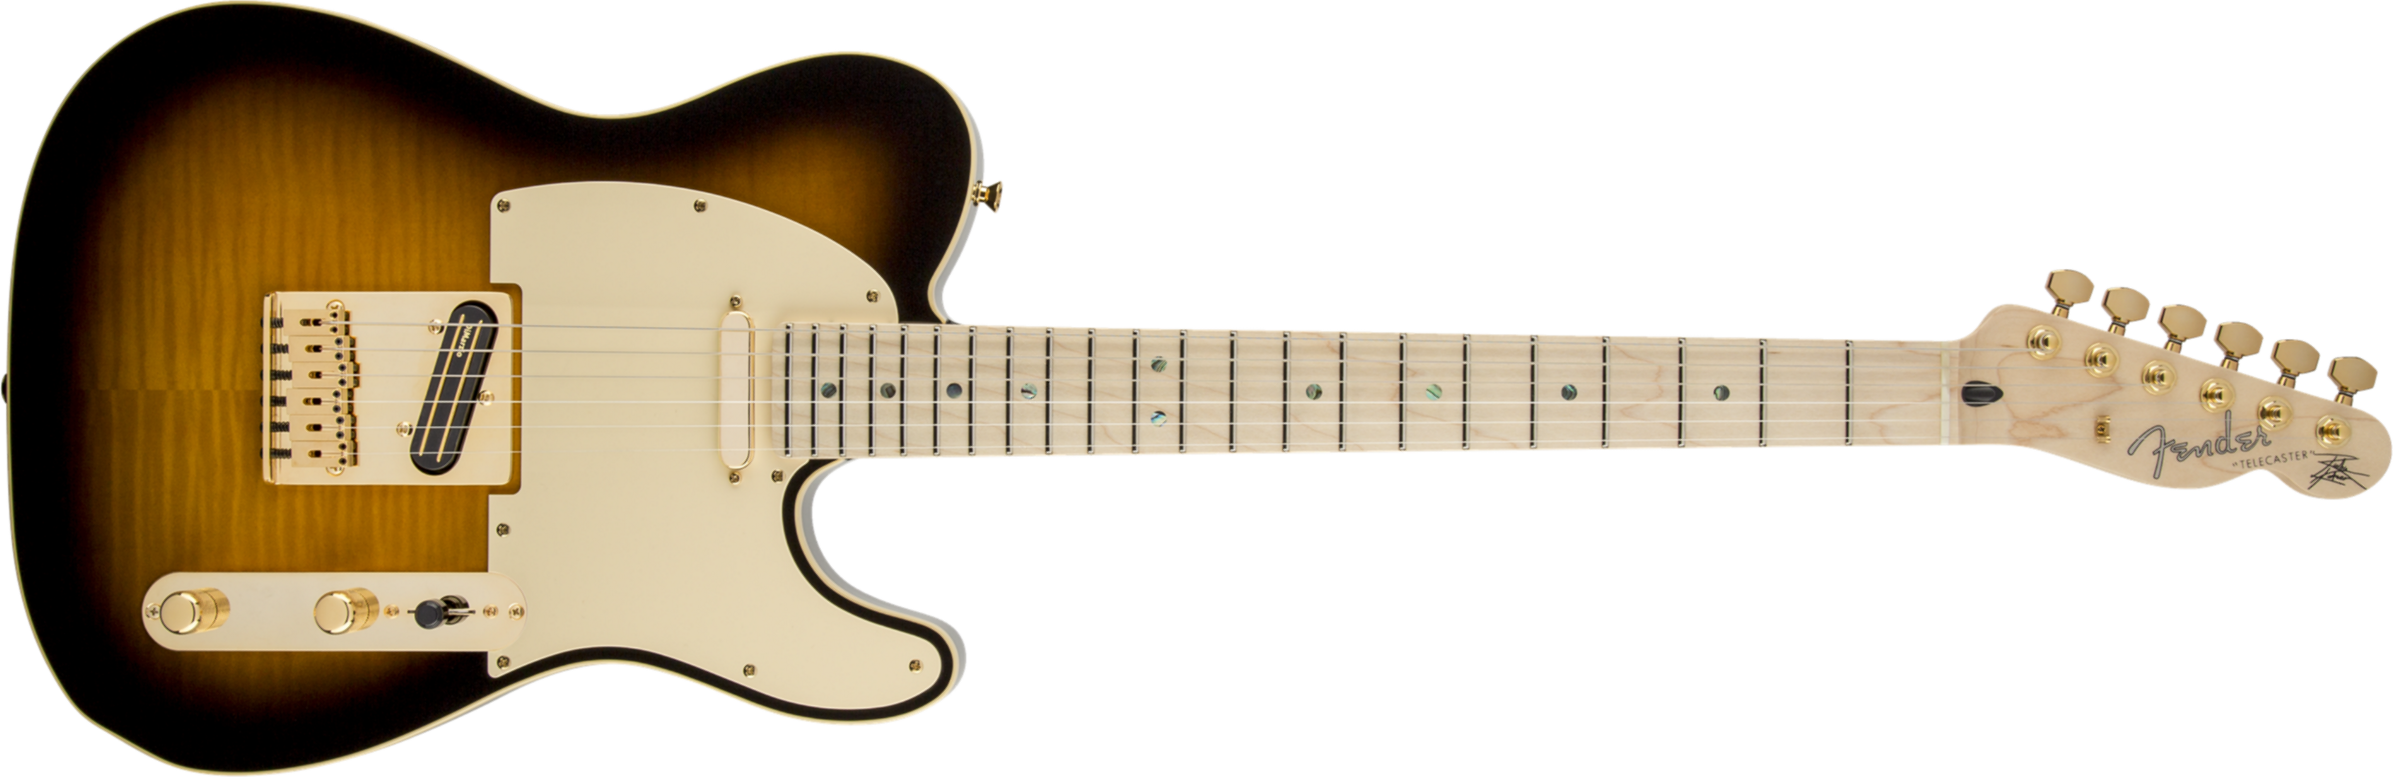 Fender Telecaster Richie Kotzen (jap, Mn) - Brown Sunburst - E-Gitarre in Teleform - Main picture